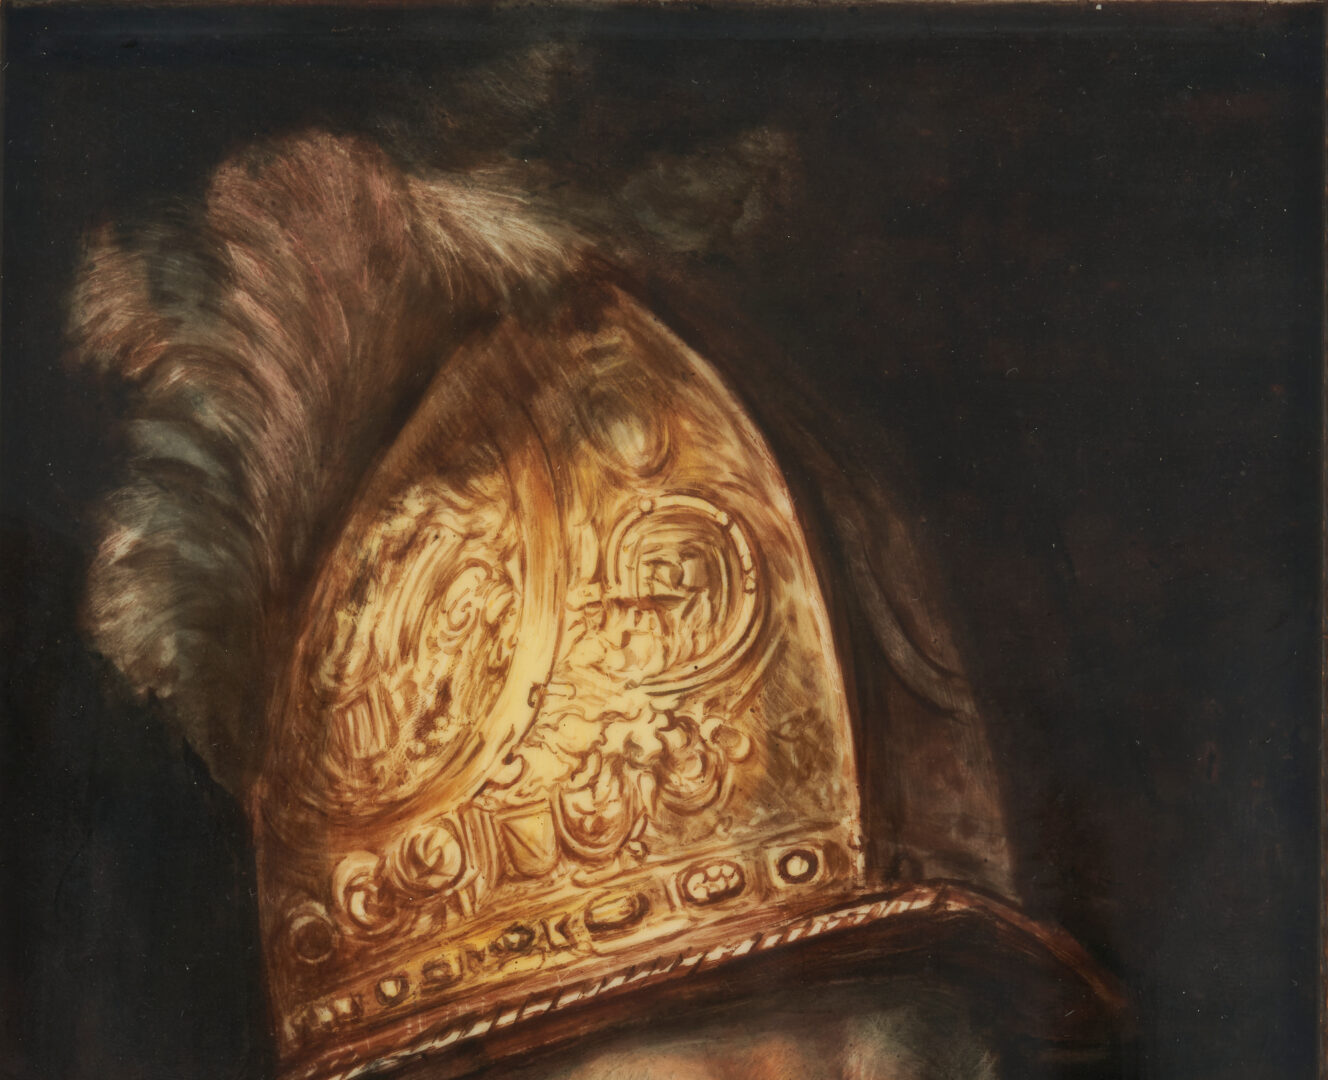 Lot 914: KPM Porcelain Plaque After Rembrandt, Man w/ Golden Helmet